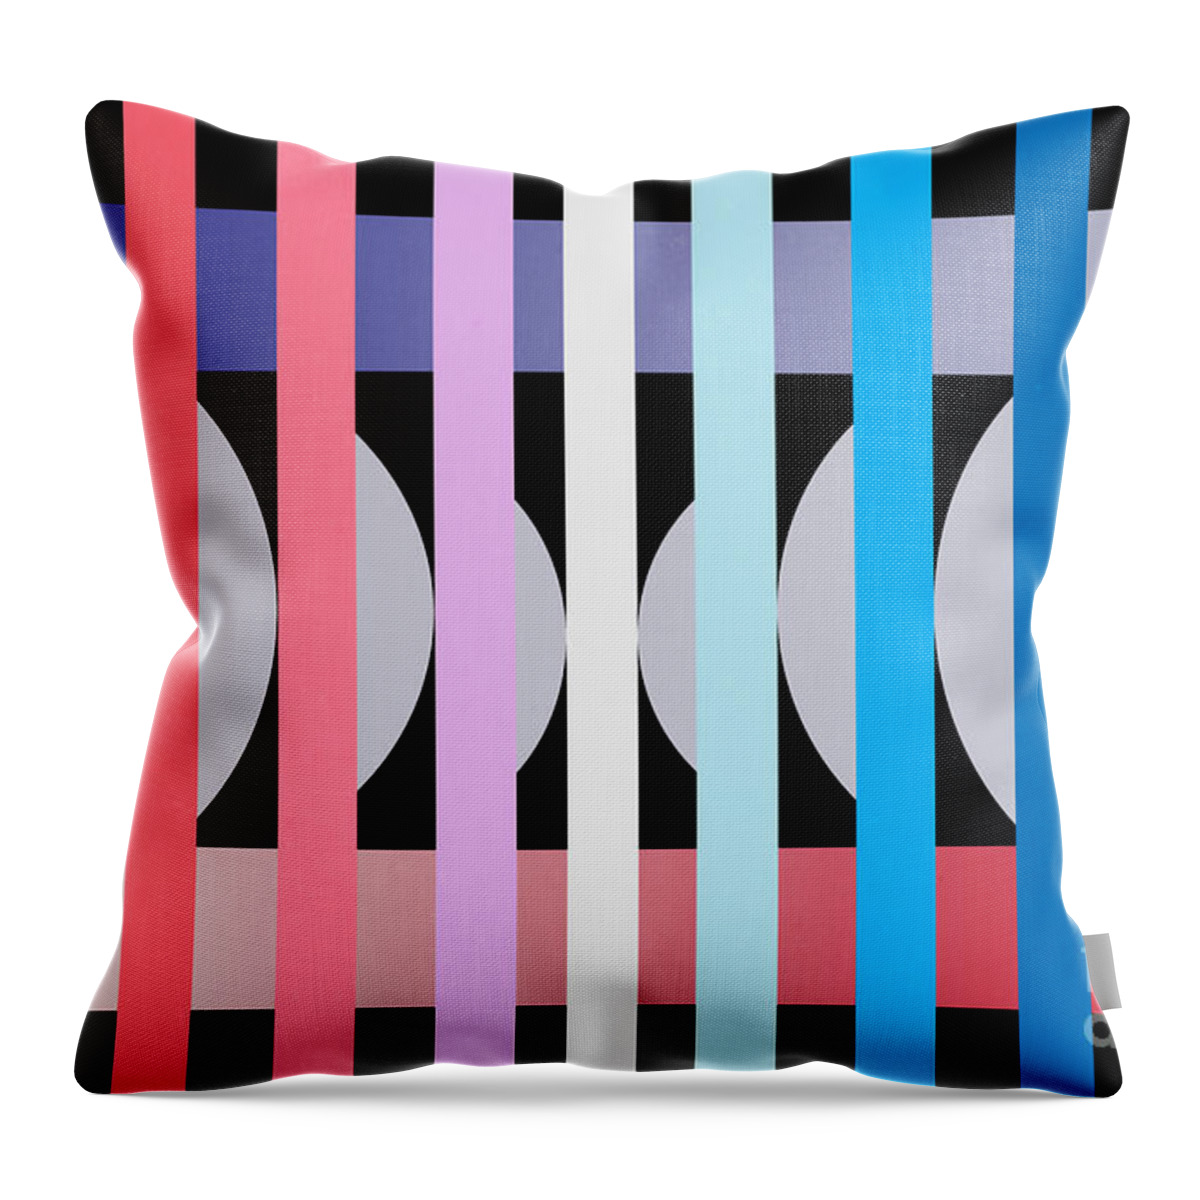 Contemporary Throw Pillow featuring the digital art Fun Geometric by Mark Ashkenazi